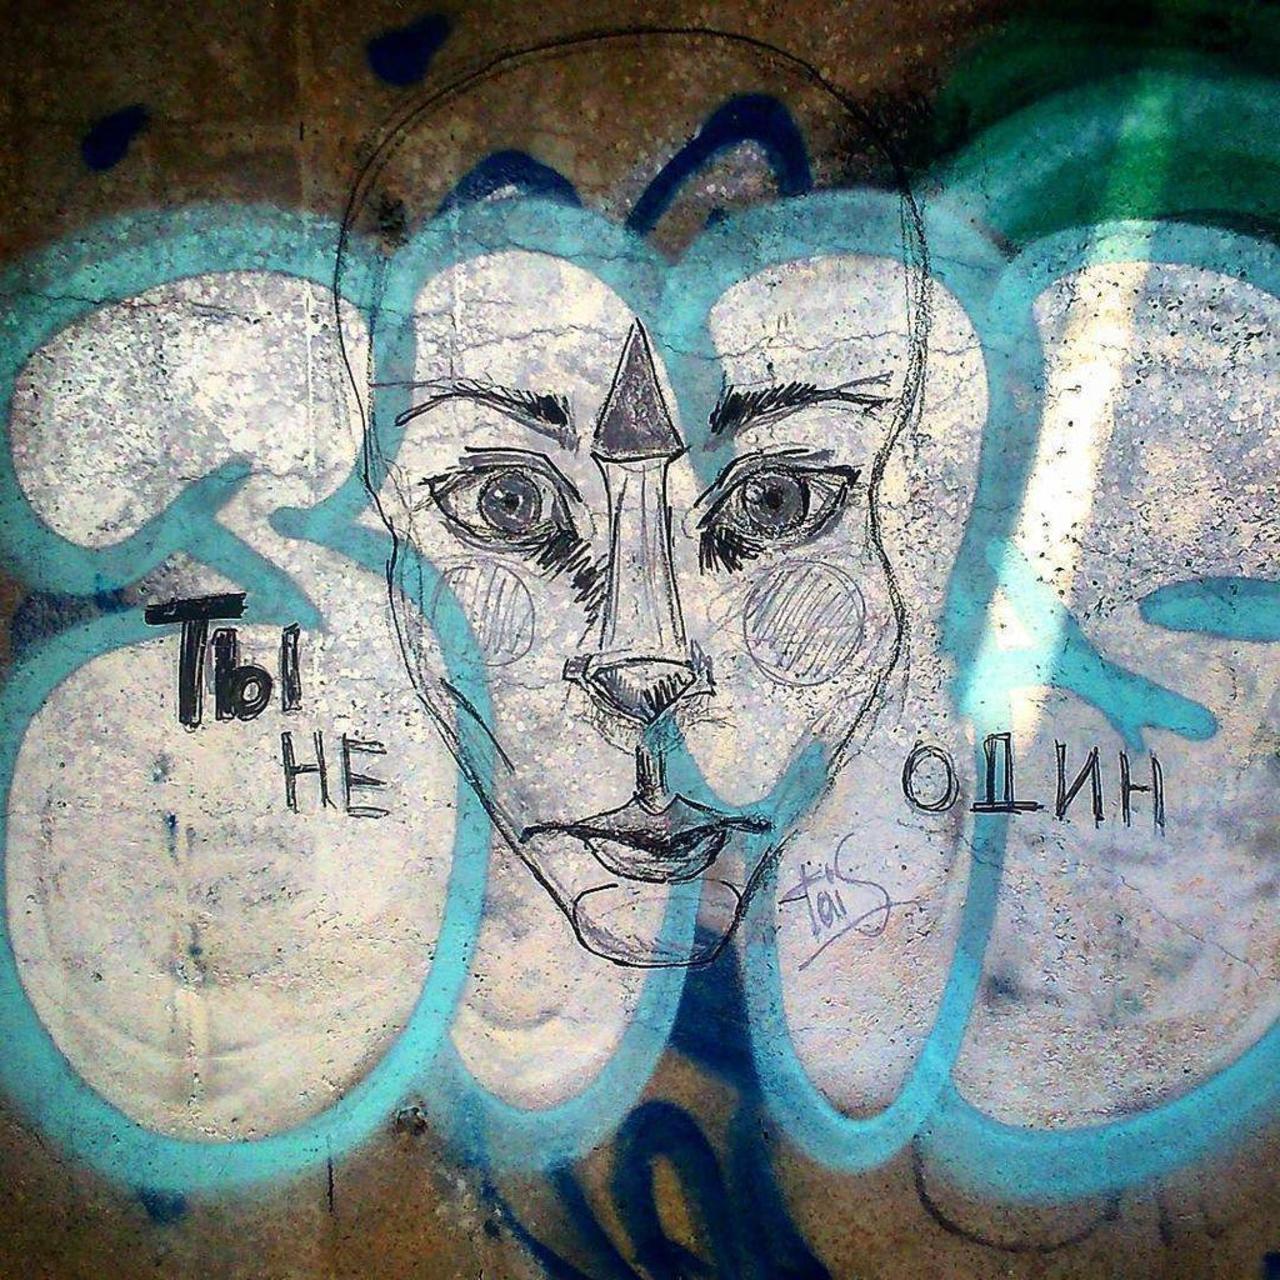 Hope. #граффити #art #streetart #graffiti #street #wallart #vsco #vscocam #vscorussia #крск http://t.co/WsUpj1DqyK